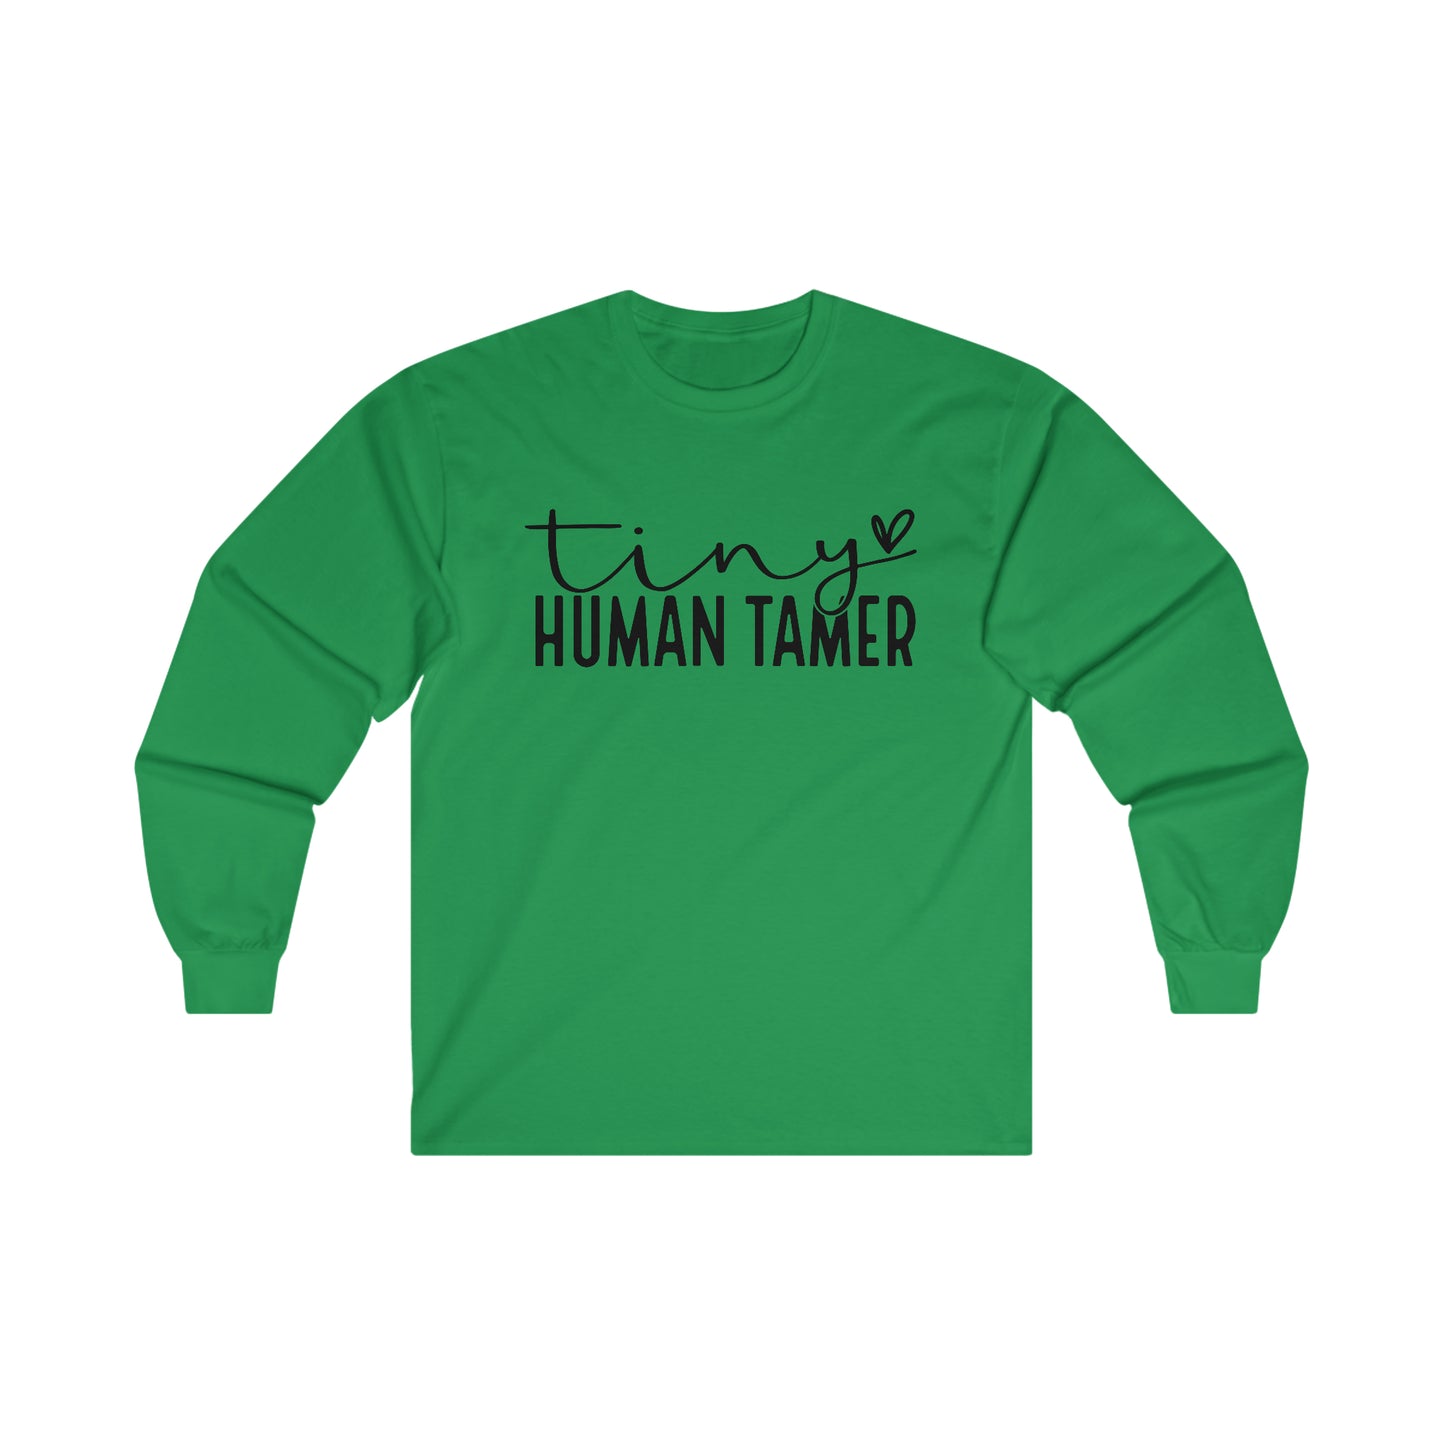 Human Tamer Long Sleeve Shirt